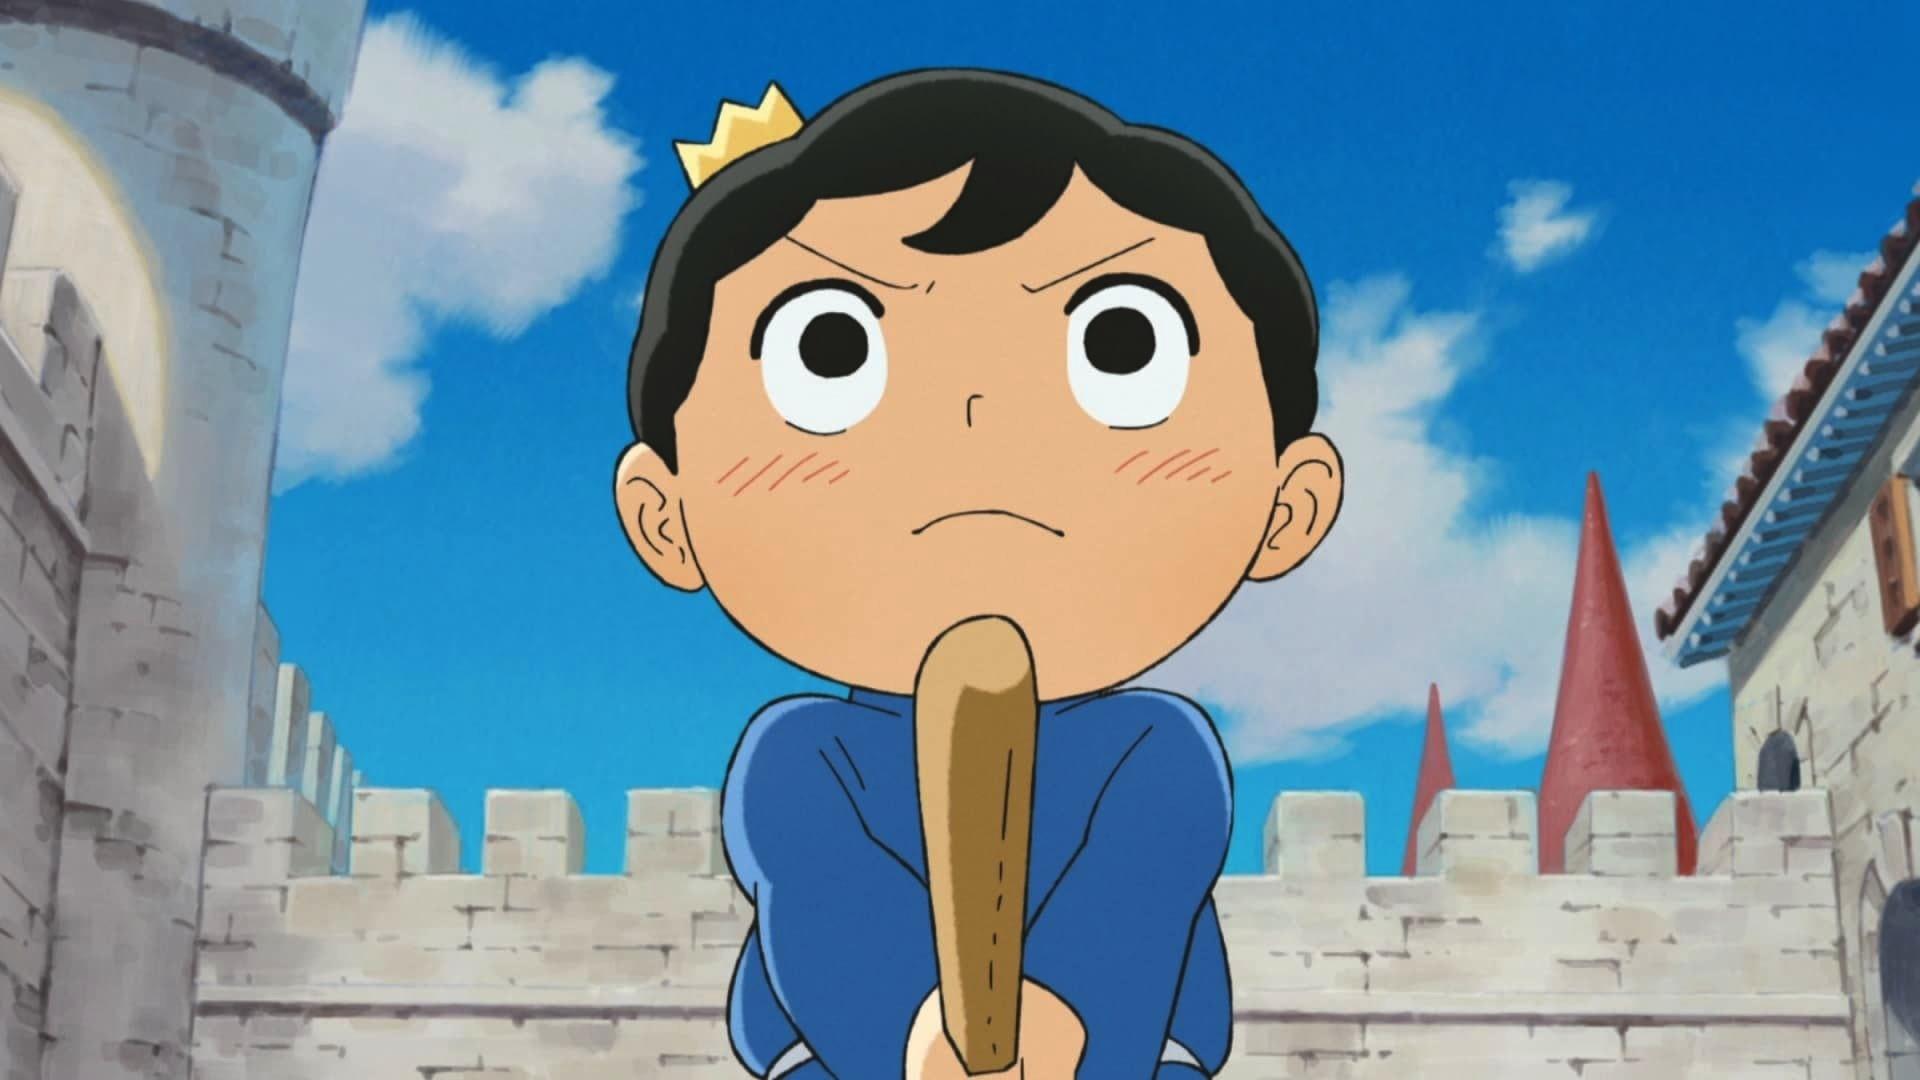 Personaje principal de ousama ranking, bojji, sosteniendo una espada de palo decidido